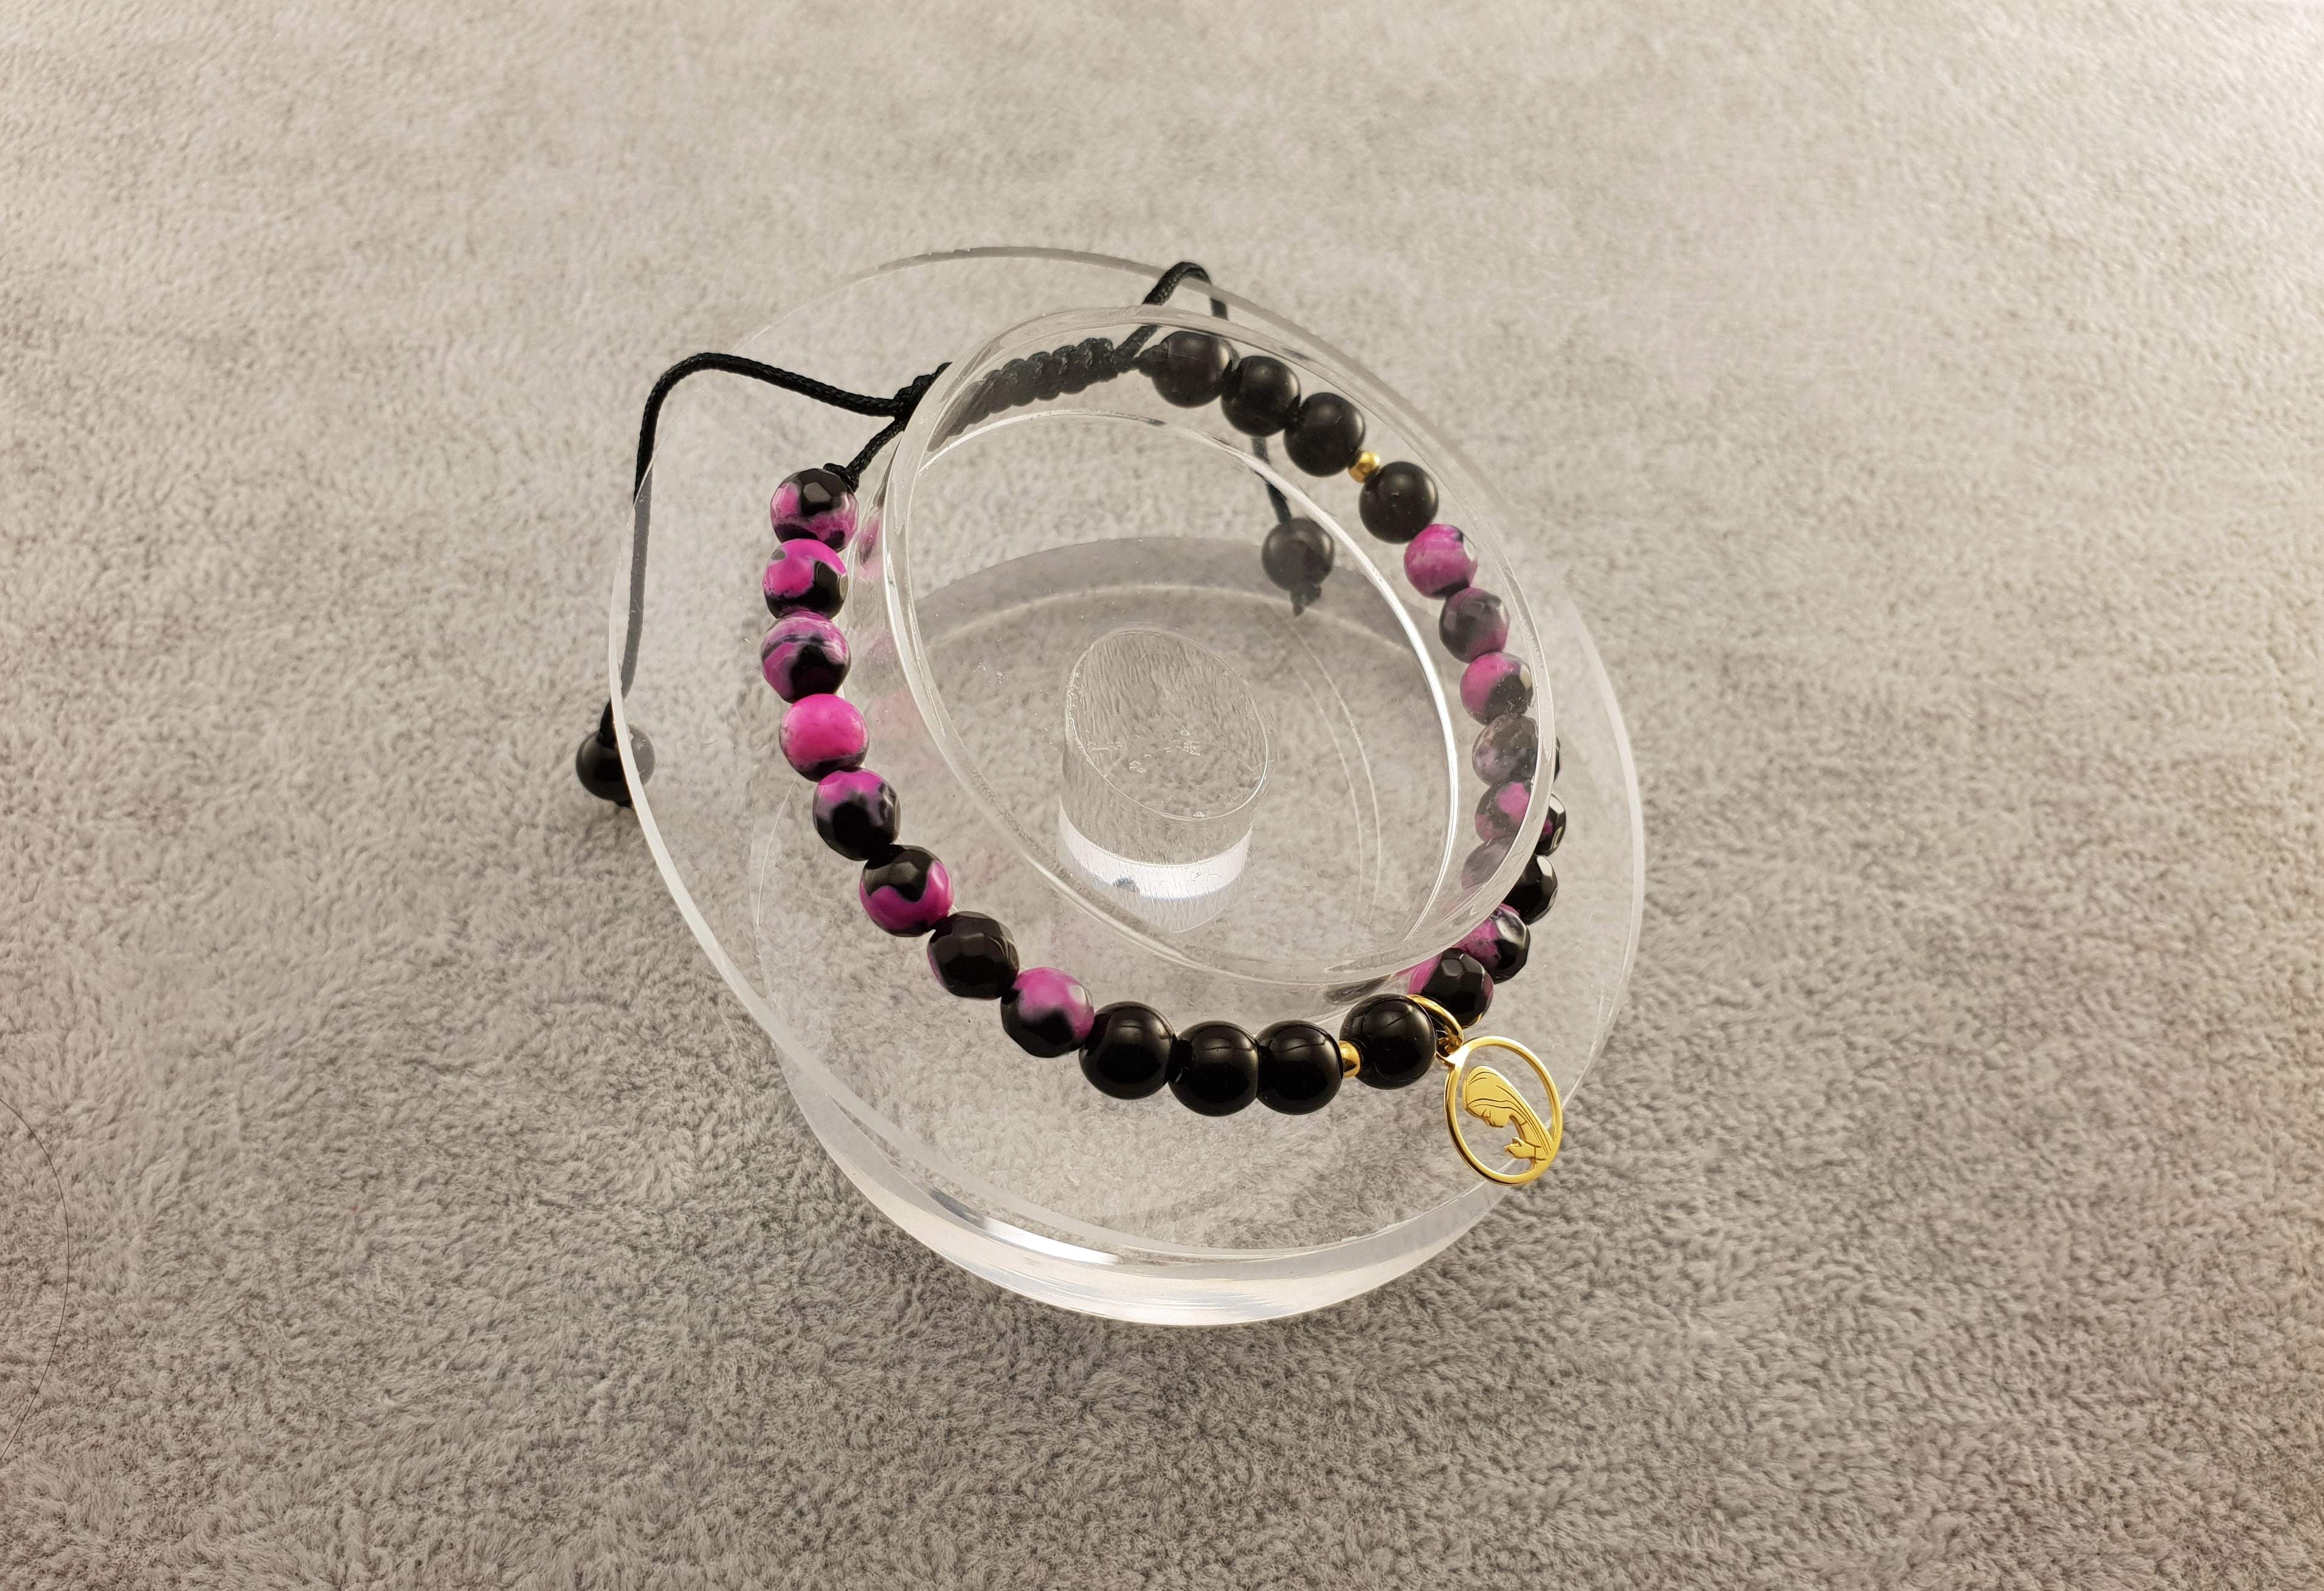 Agate beads - Praying 2 - By Janine Jewellery